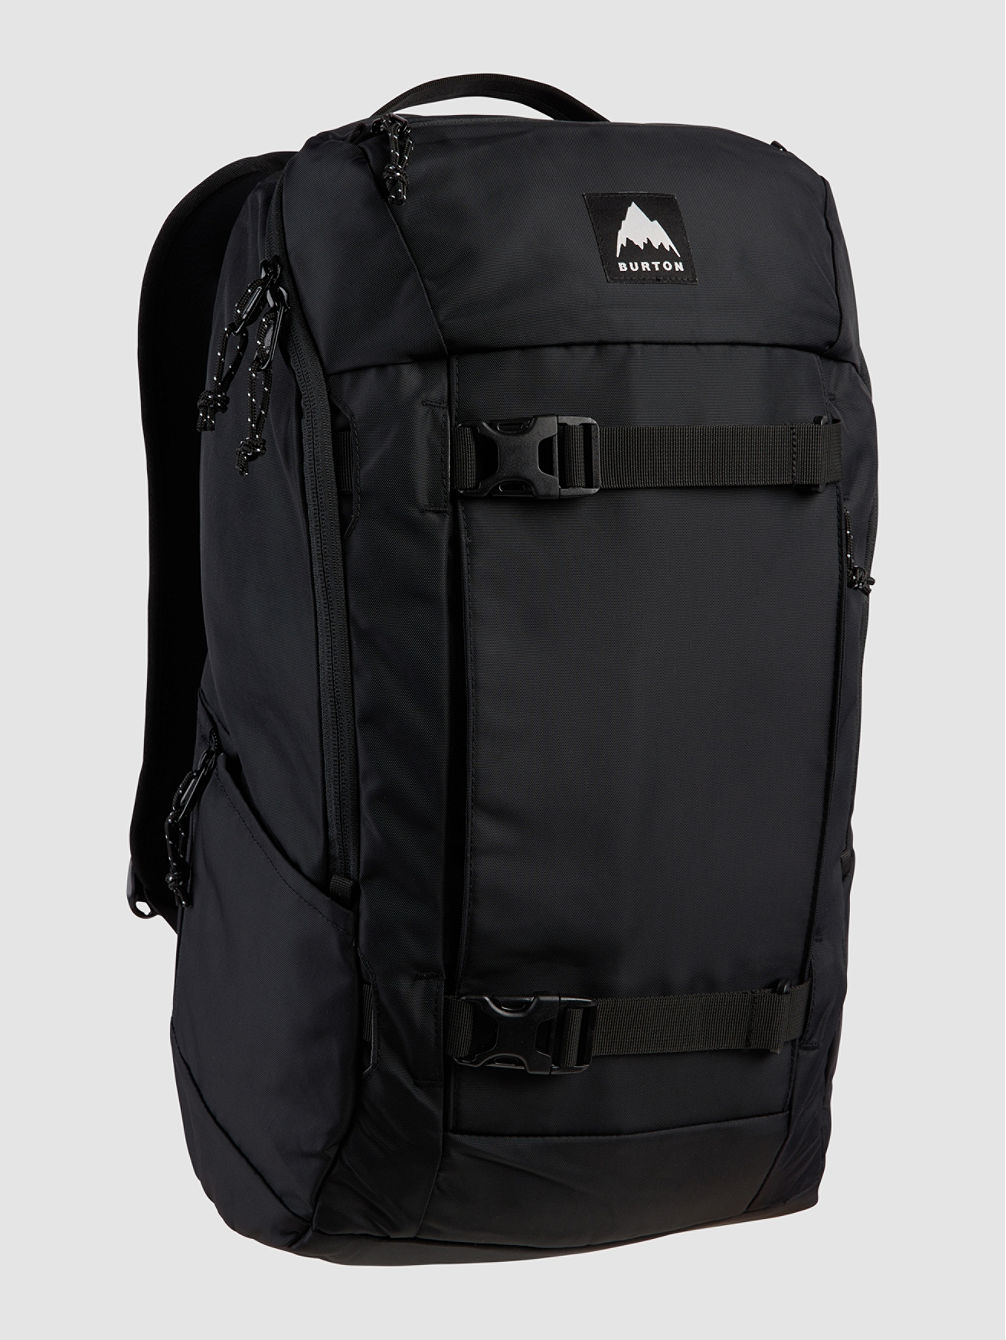 Kilo 2.0 27L Backpack